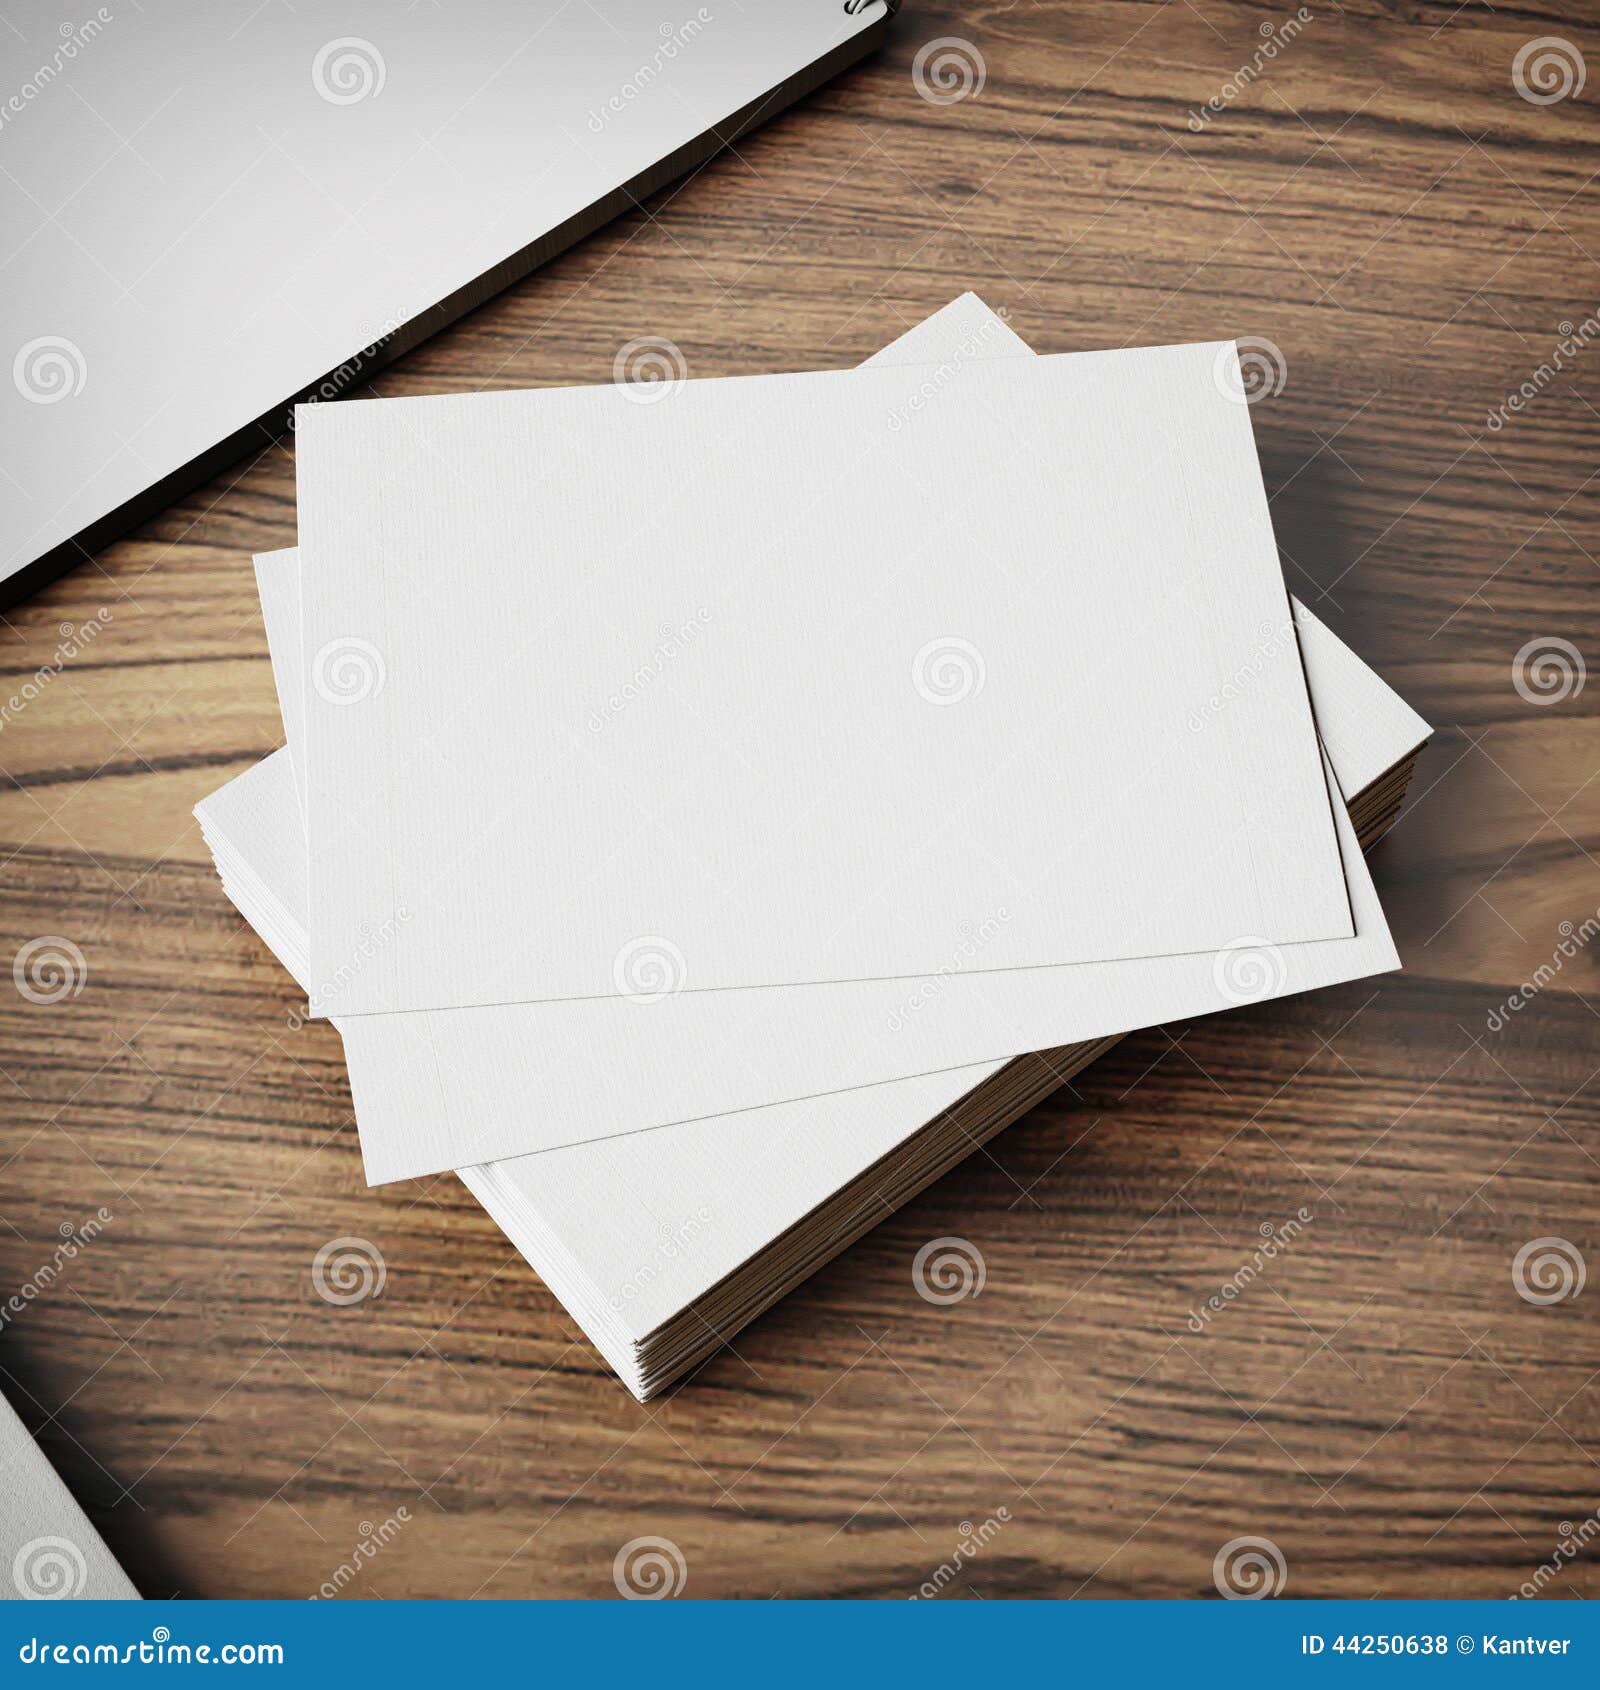 Белый лист бумаги на столе. Бумаги на столе. Листок бумаги. Листок бумаги на столе. Белый лист на столе.